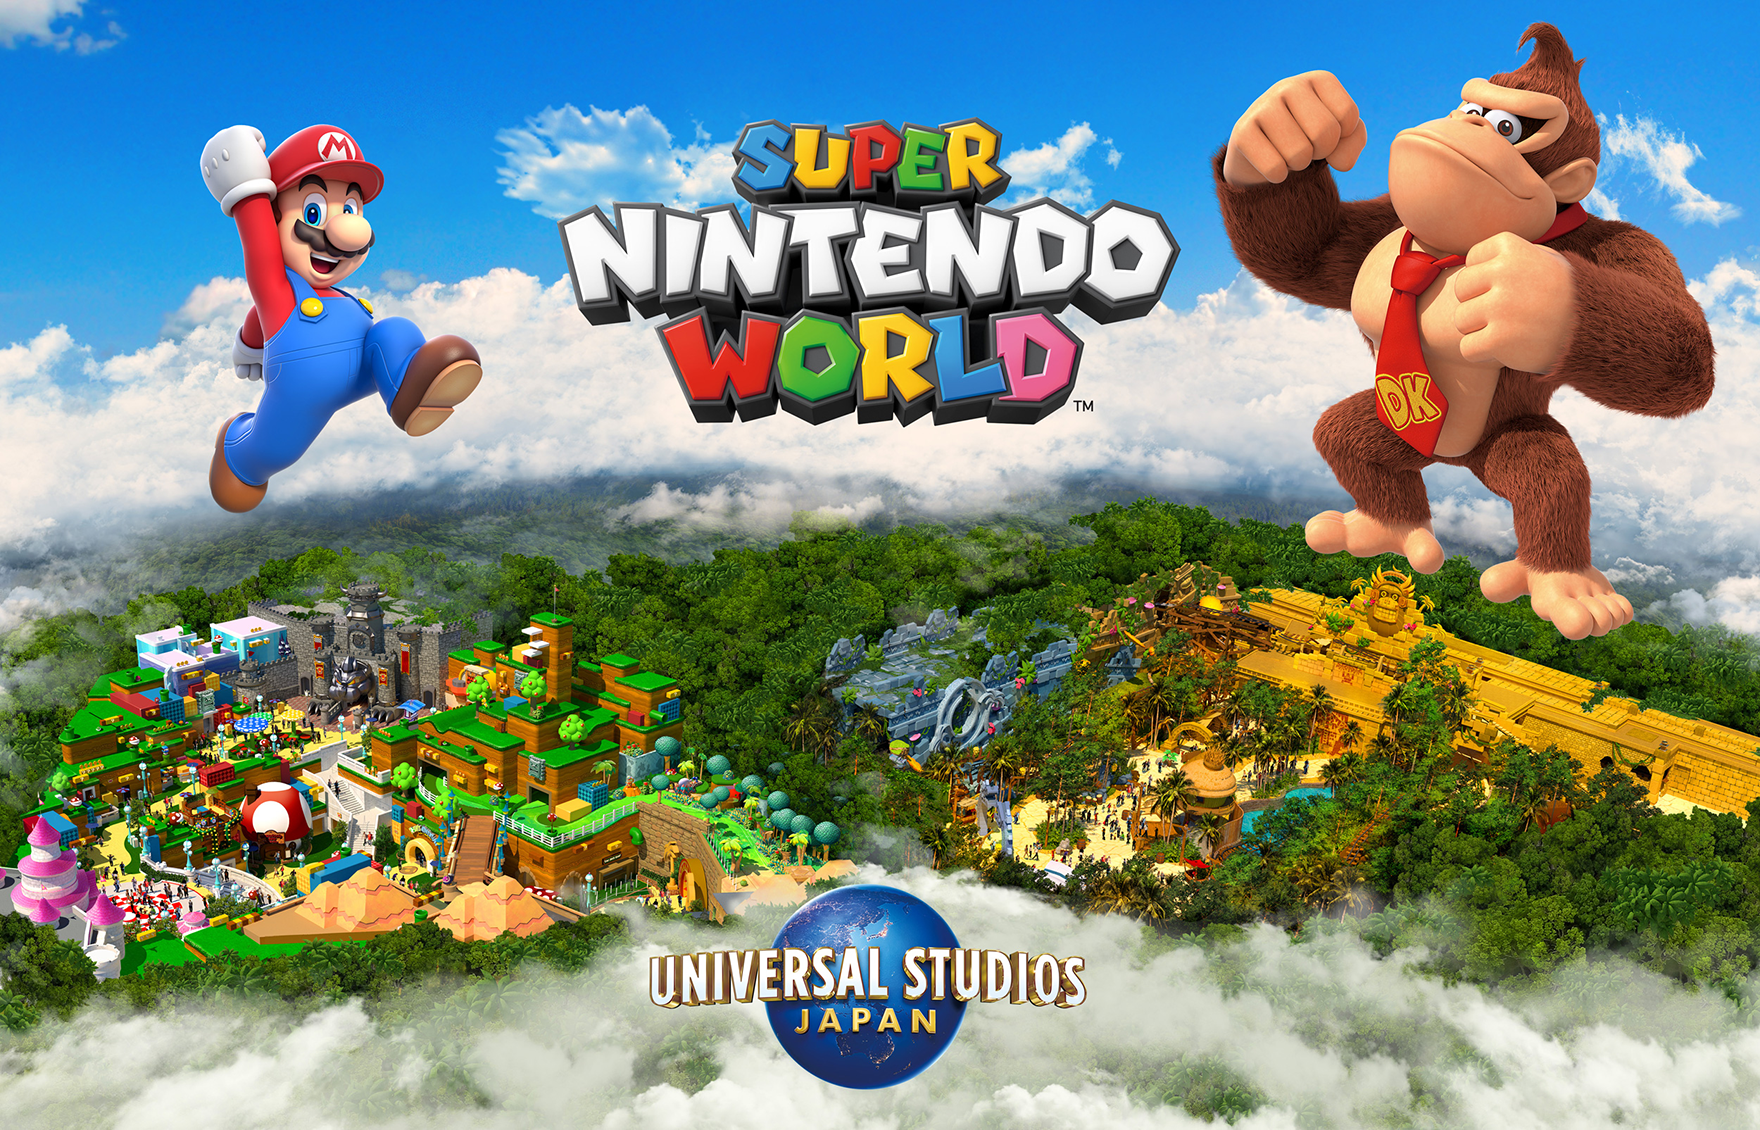 alt="Super Nintendo World"